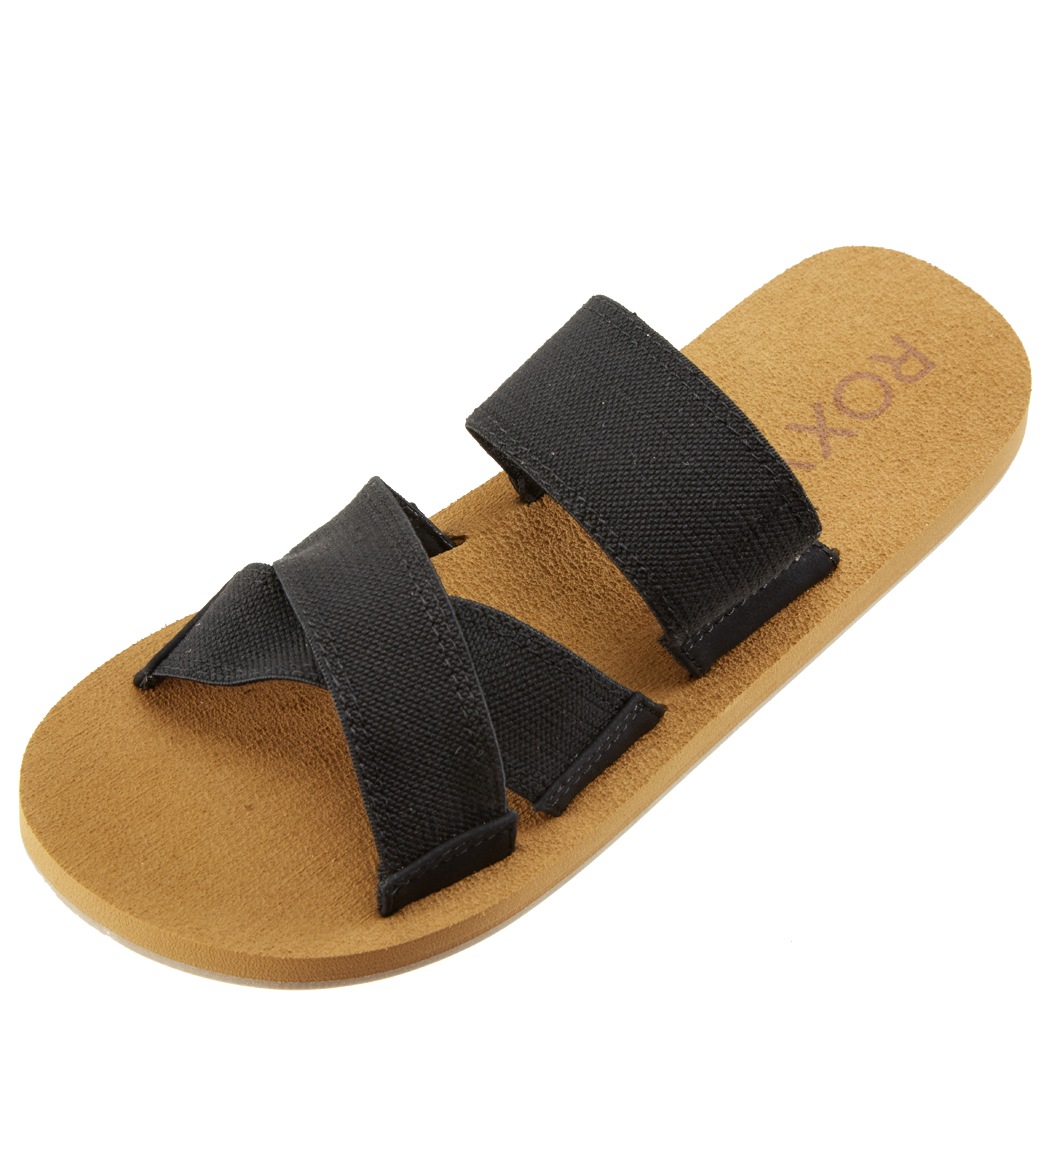 roxy slide sandals